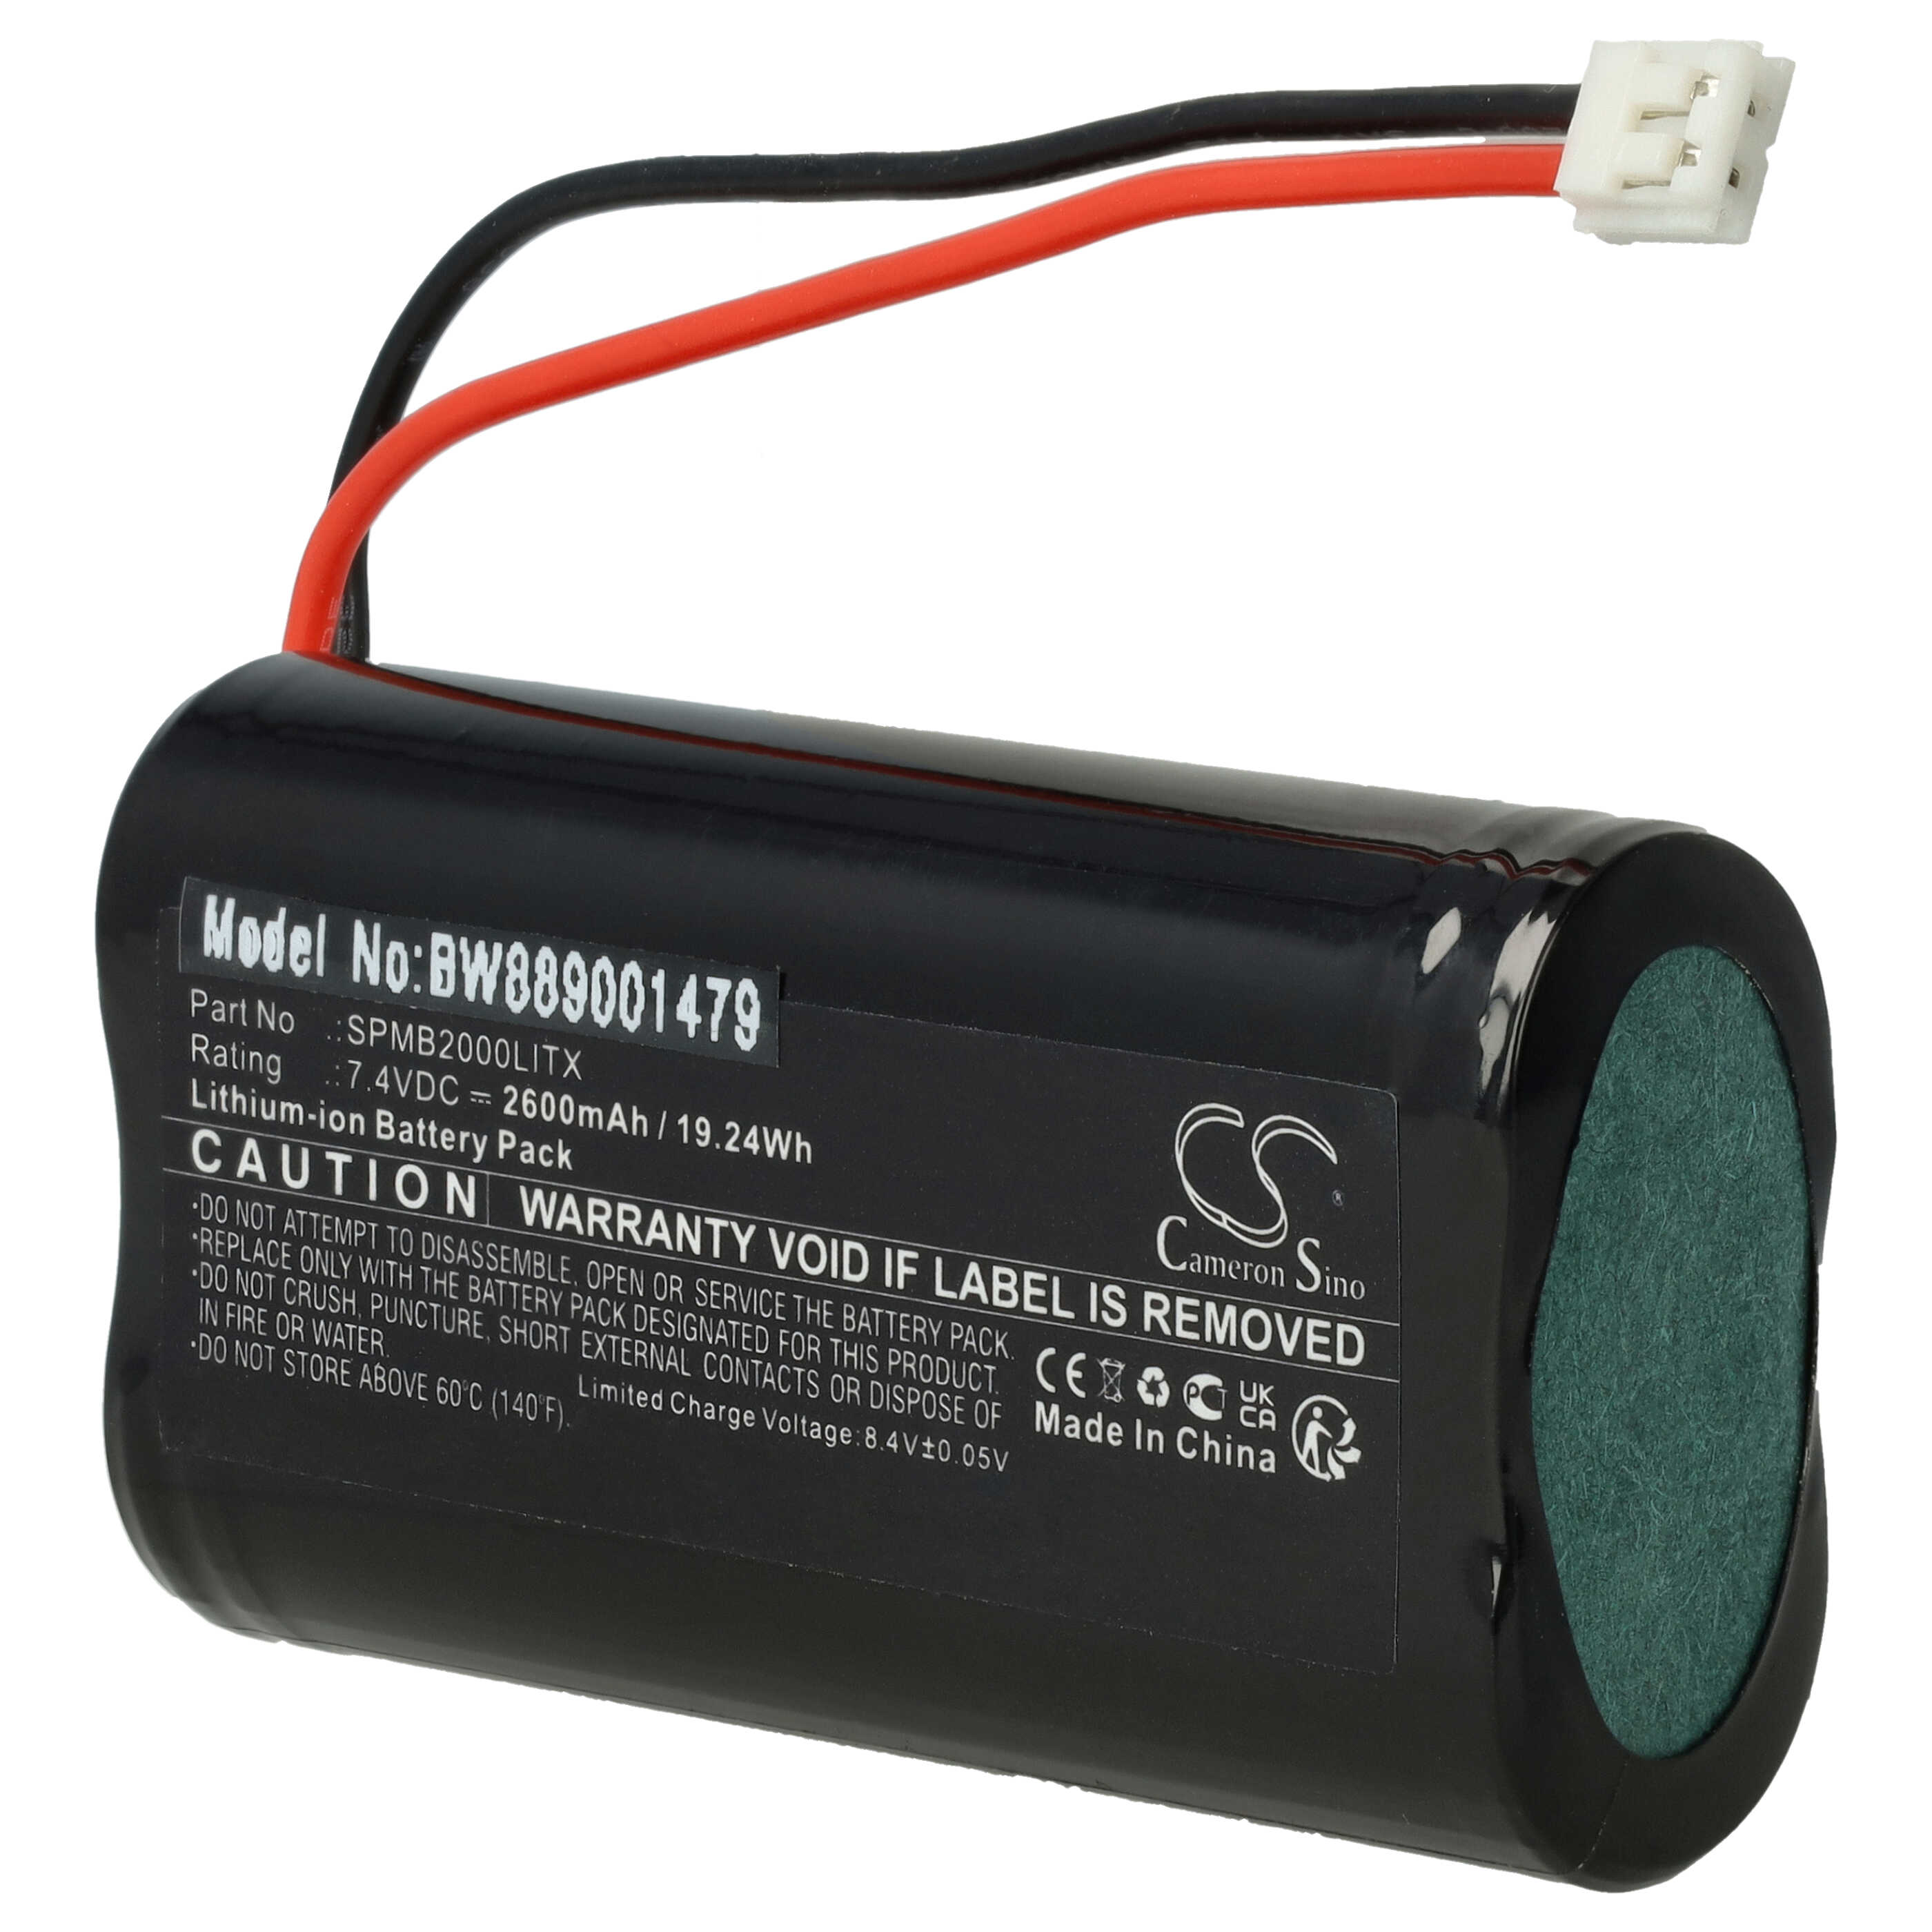 Remote Control Battery Replacement for Spektrum SPMB2000LITX - 2600mAh 7.4V Li-Ion